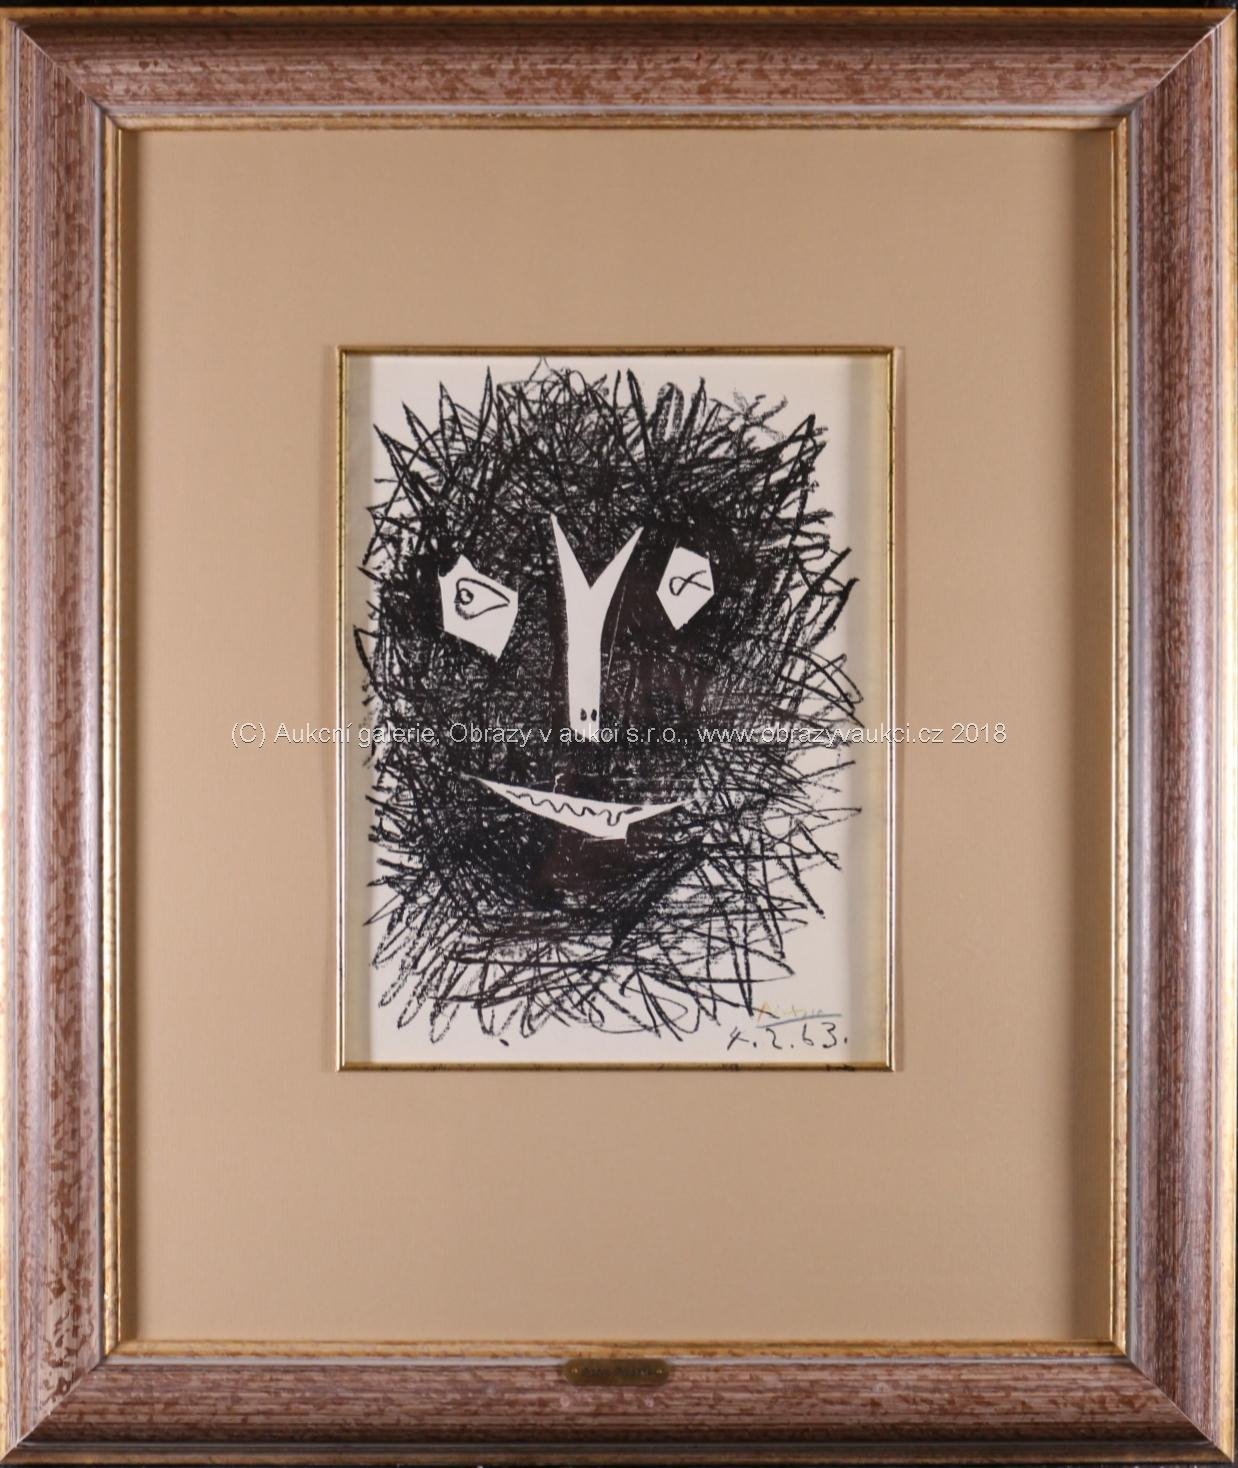 Pablo Picasso - La Masque, opus 388B